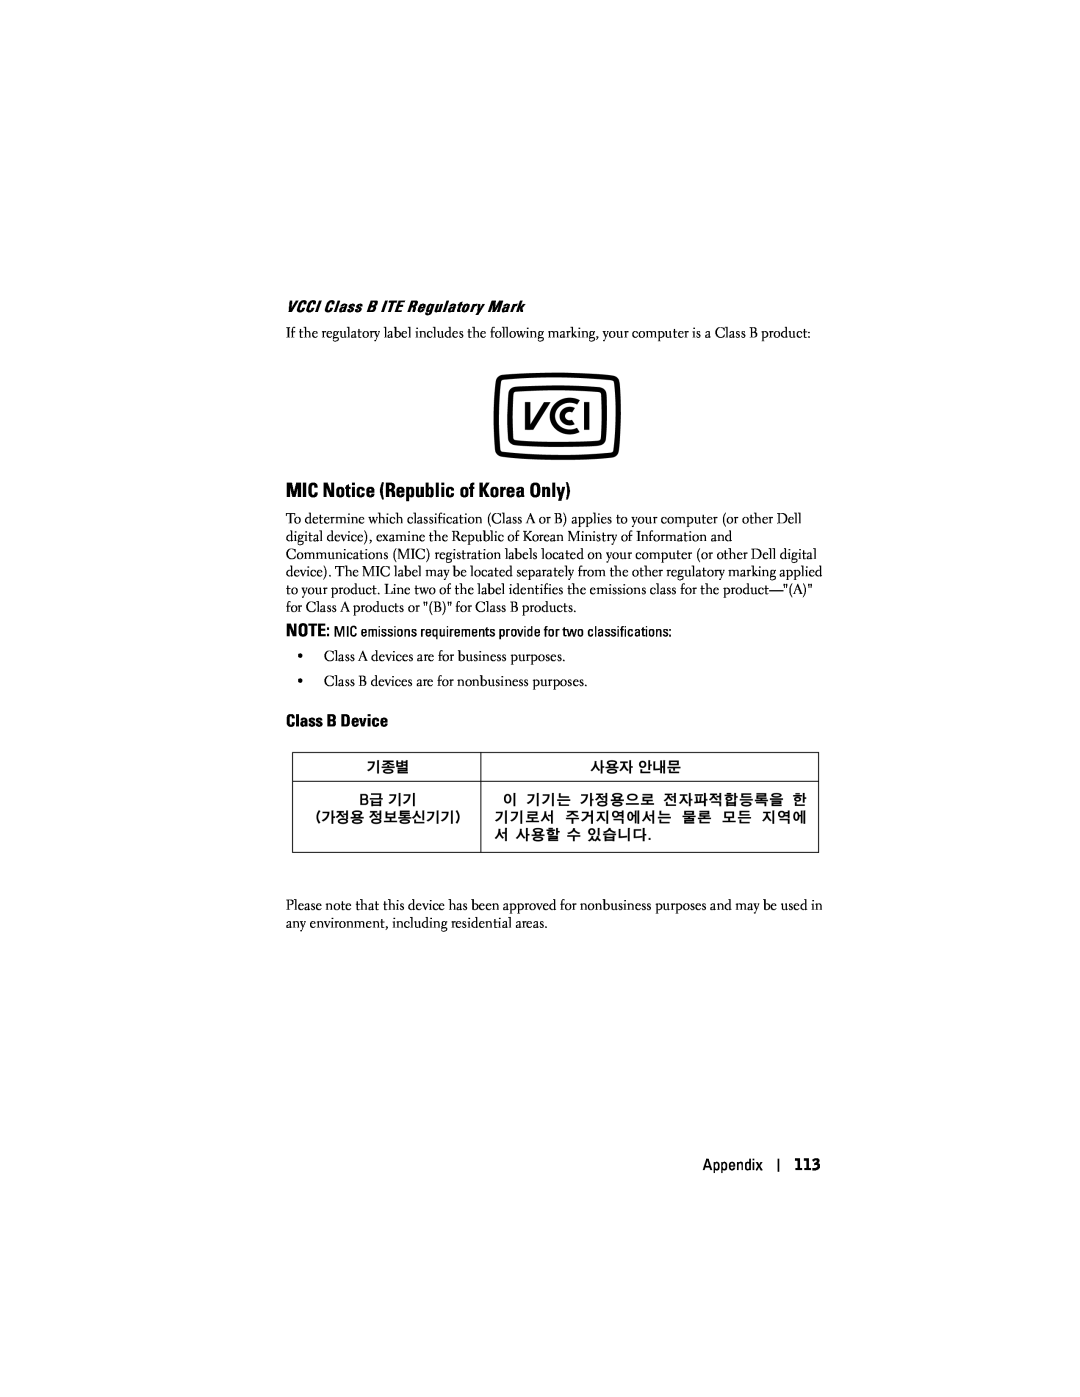 Dell HD03U, HC02U-C, HC02U-W, HC02U-B owner manual MIC Notice Republic of Korea Only, Class B Device 